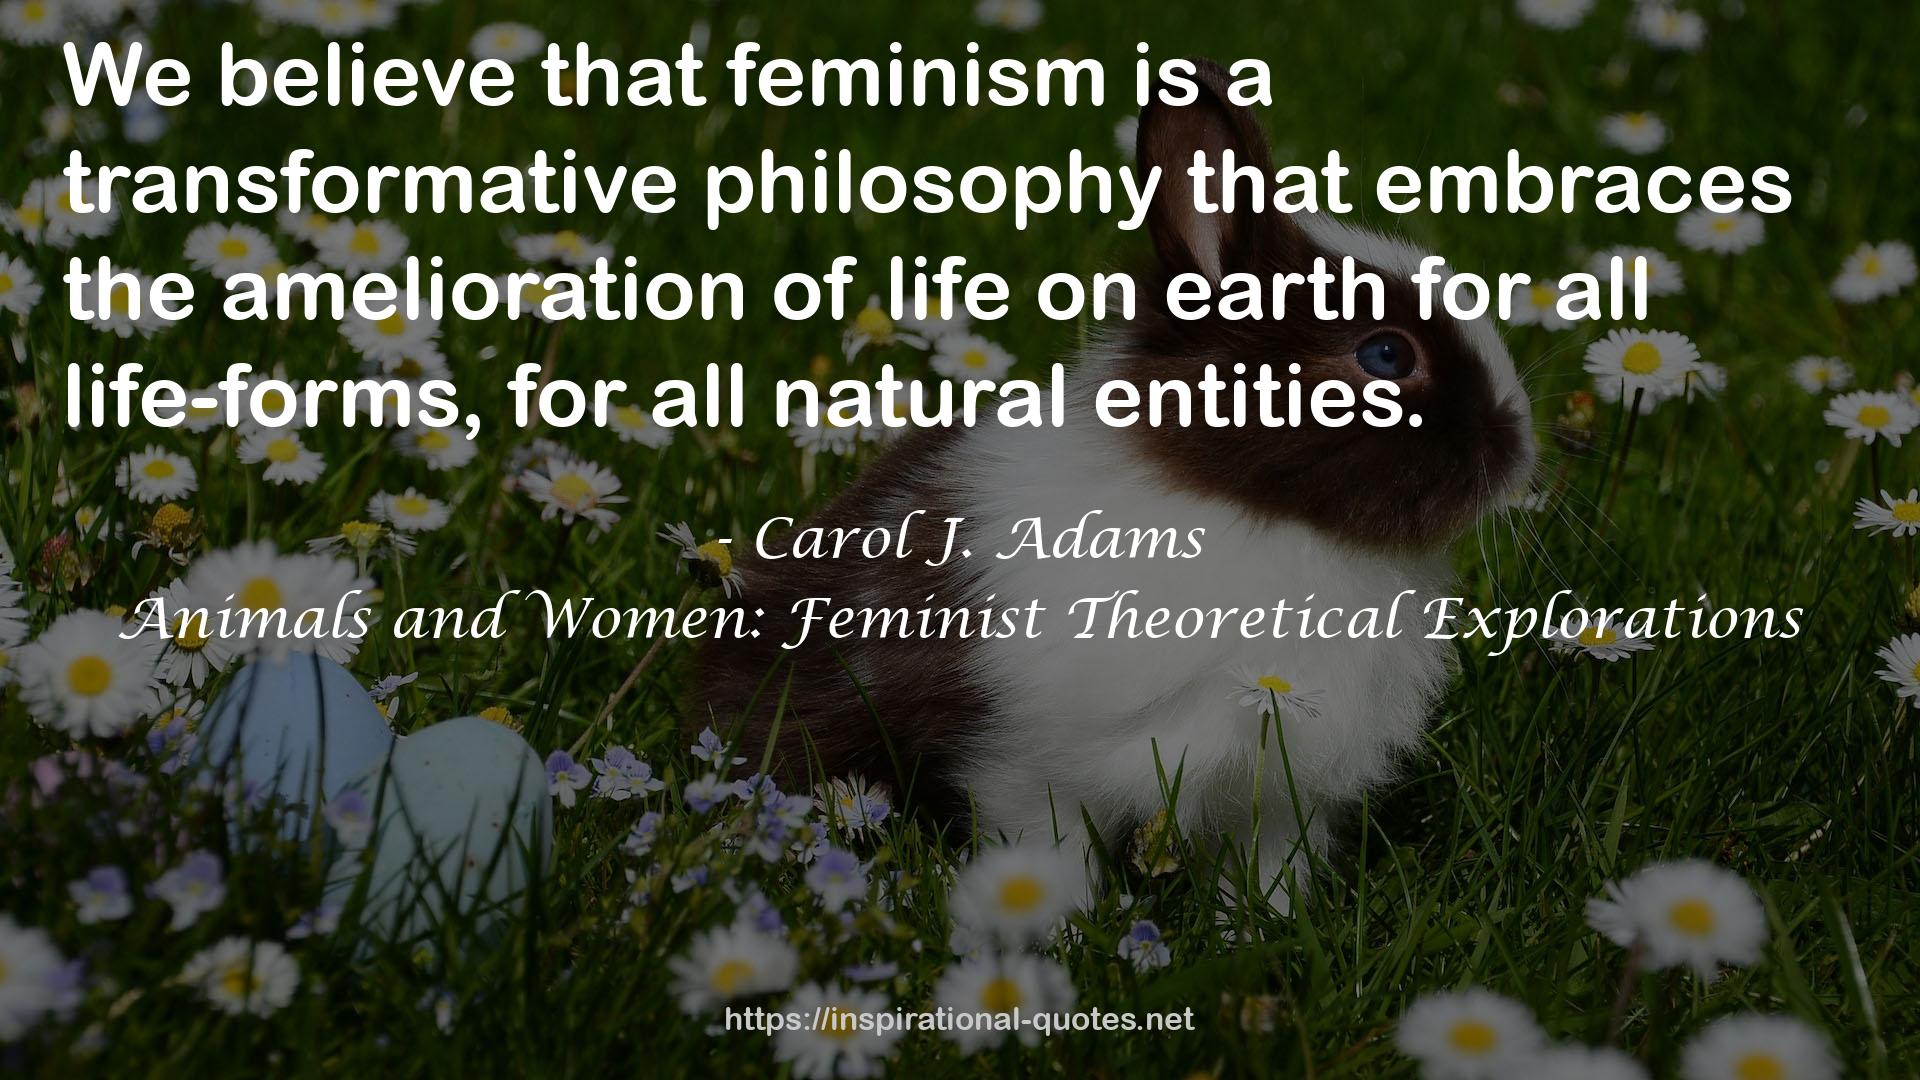 Animals and Women: Feminist Theoretical Explorations QUOTES